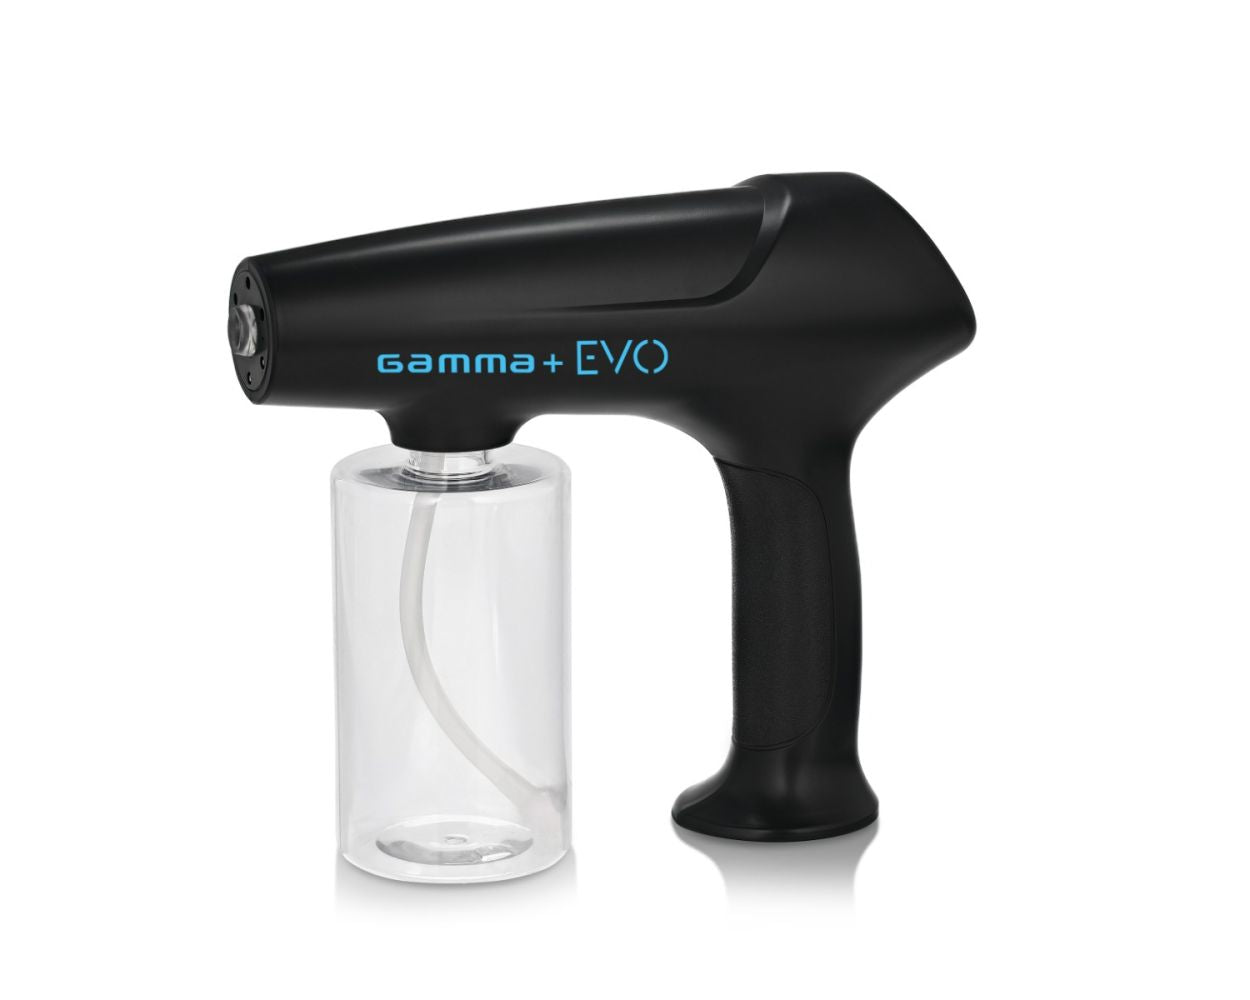 Evo Nano Spray Mist- USB-C Rechargeable Portable Sprayers System